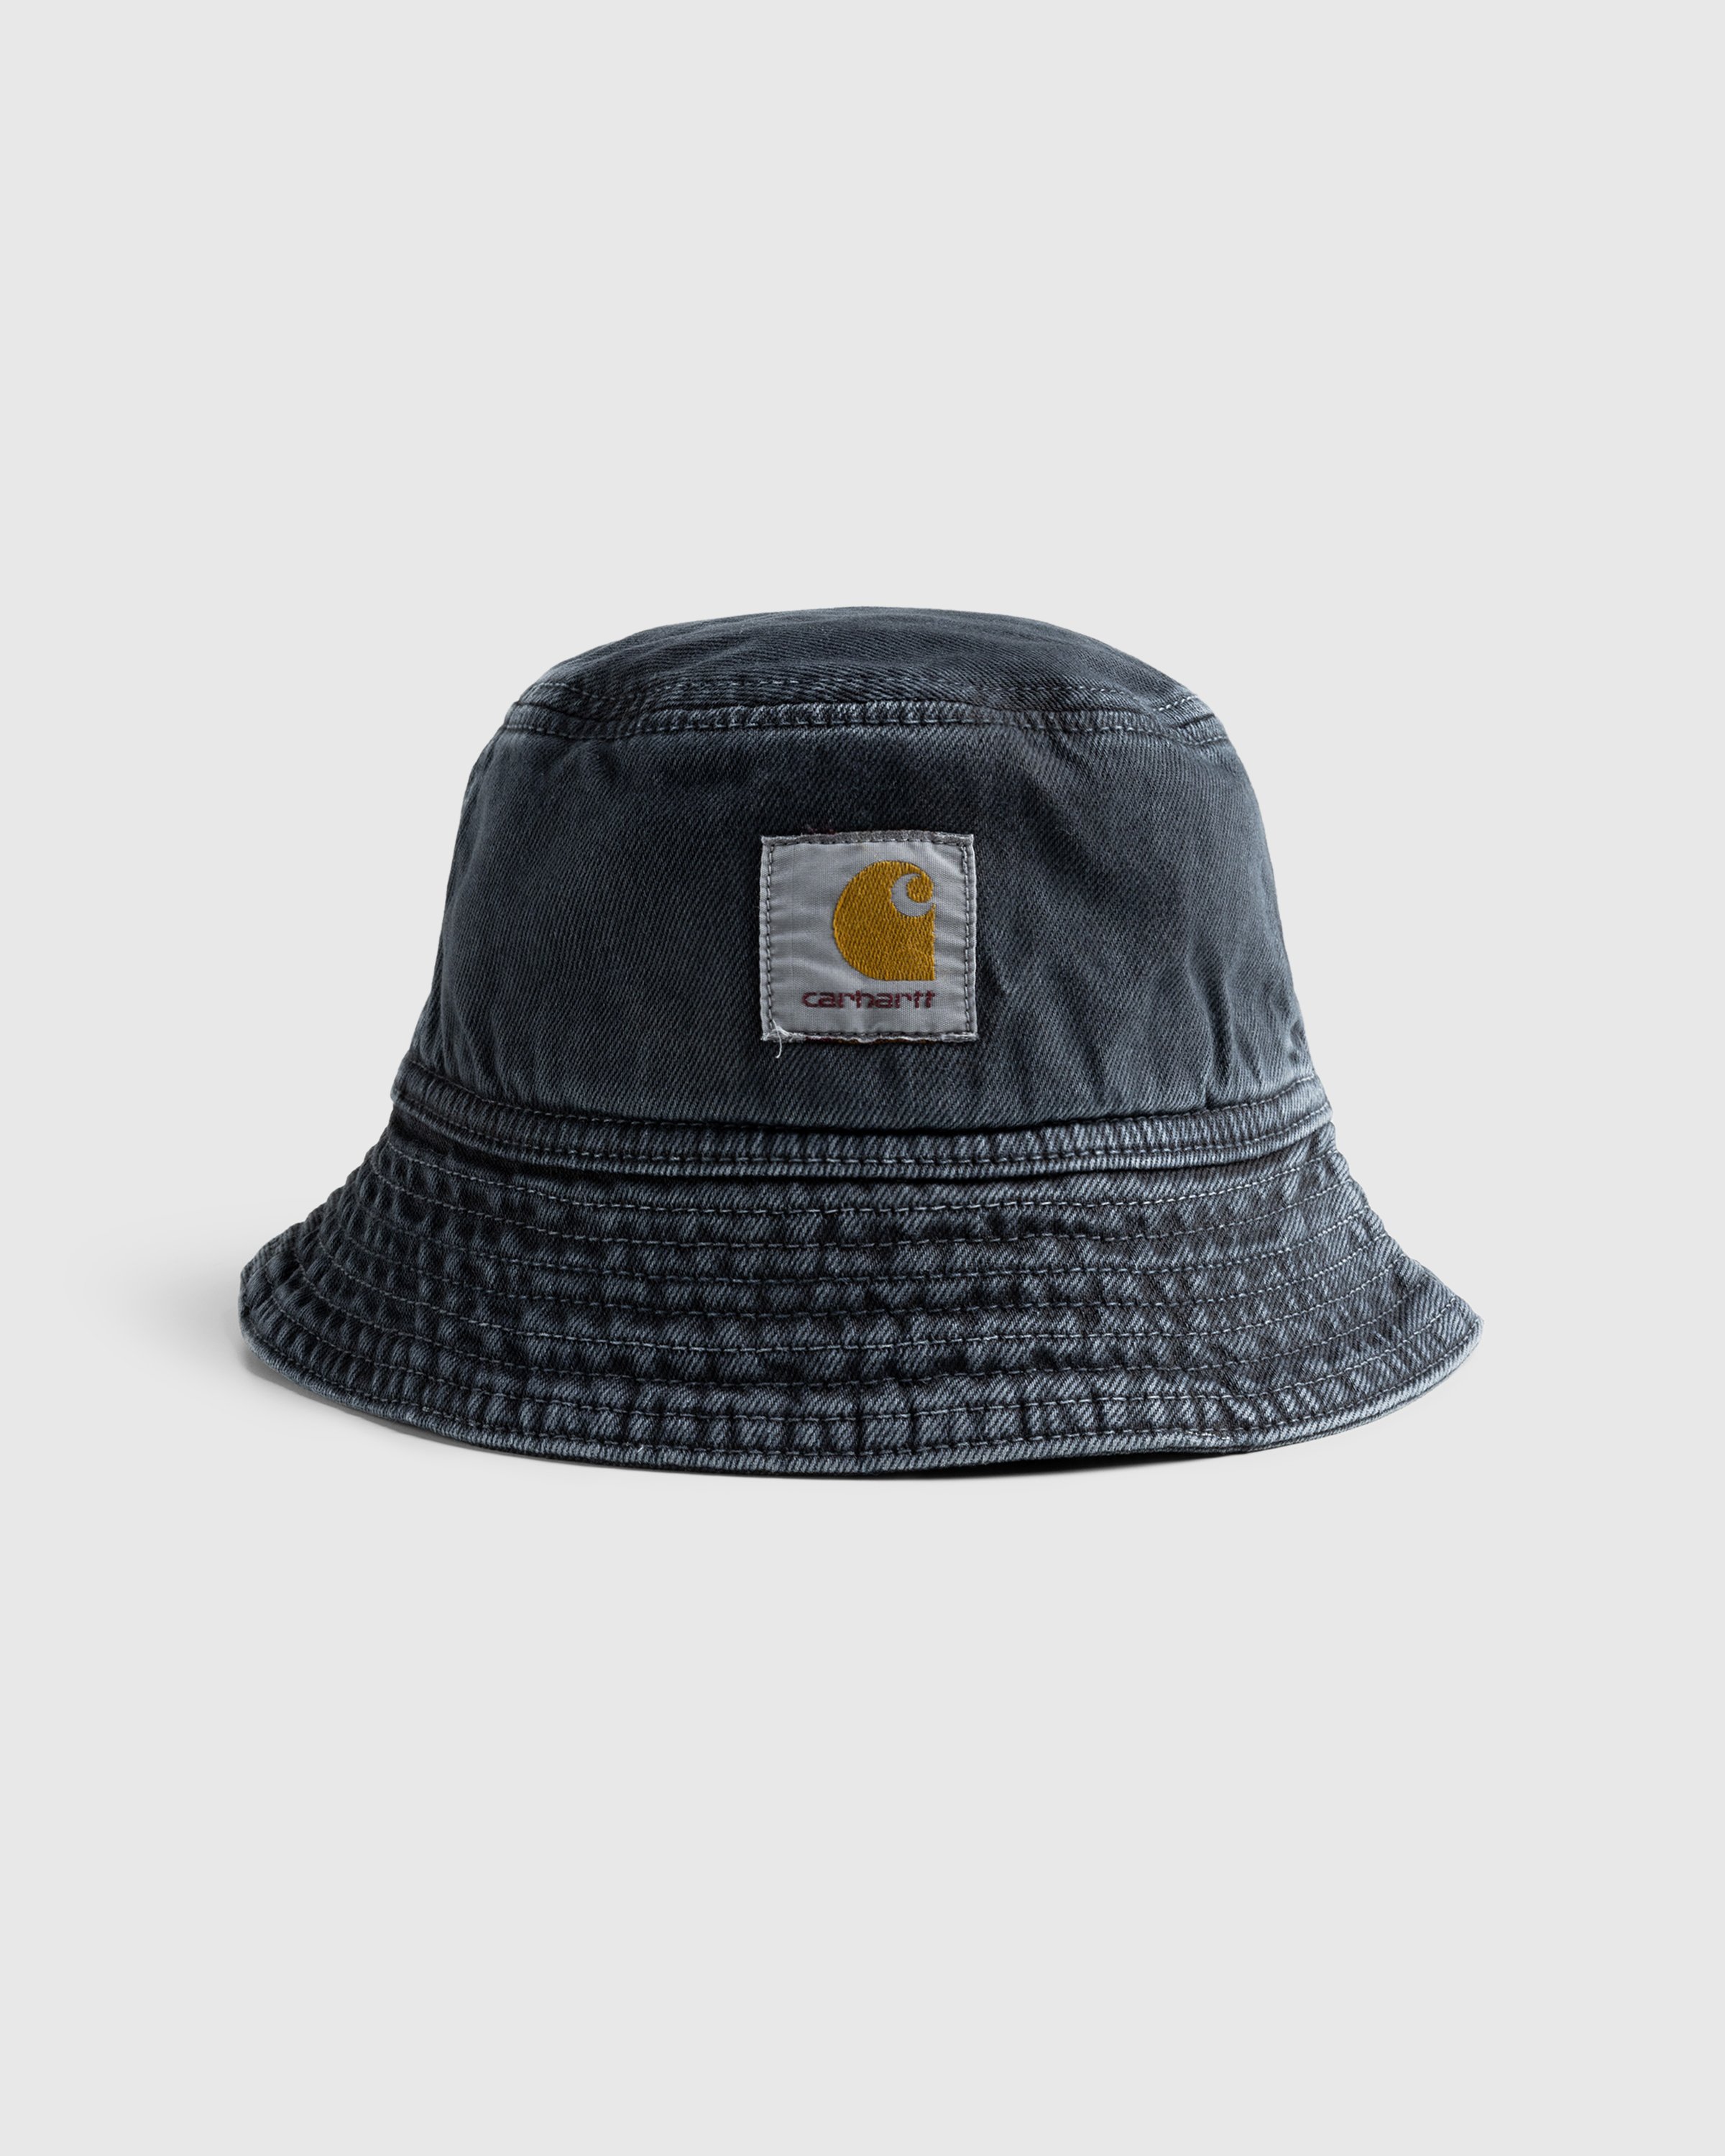 Carhartt WIP - Garrison Bucket Hat Black /stone dyed - Accessories - Black - Image 1